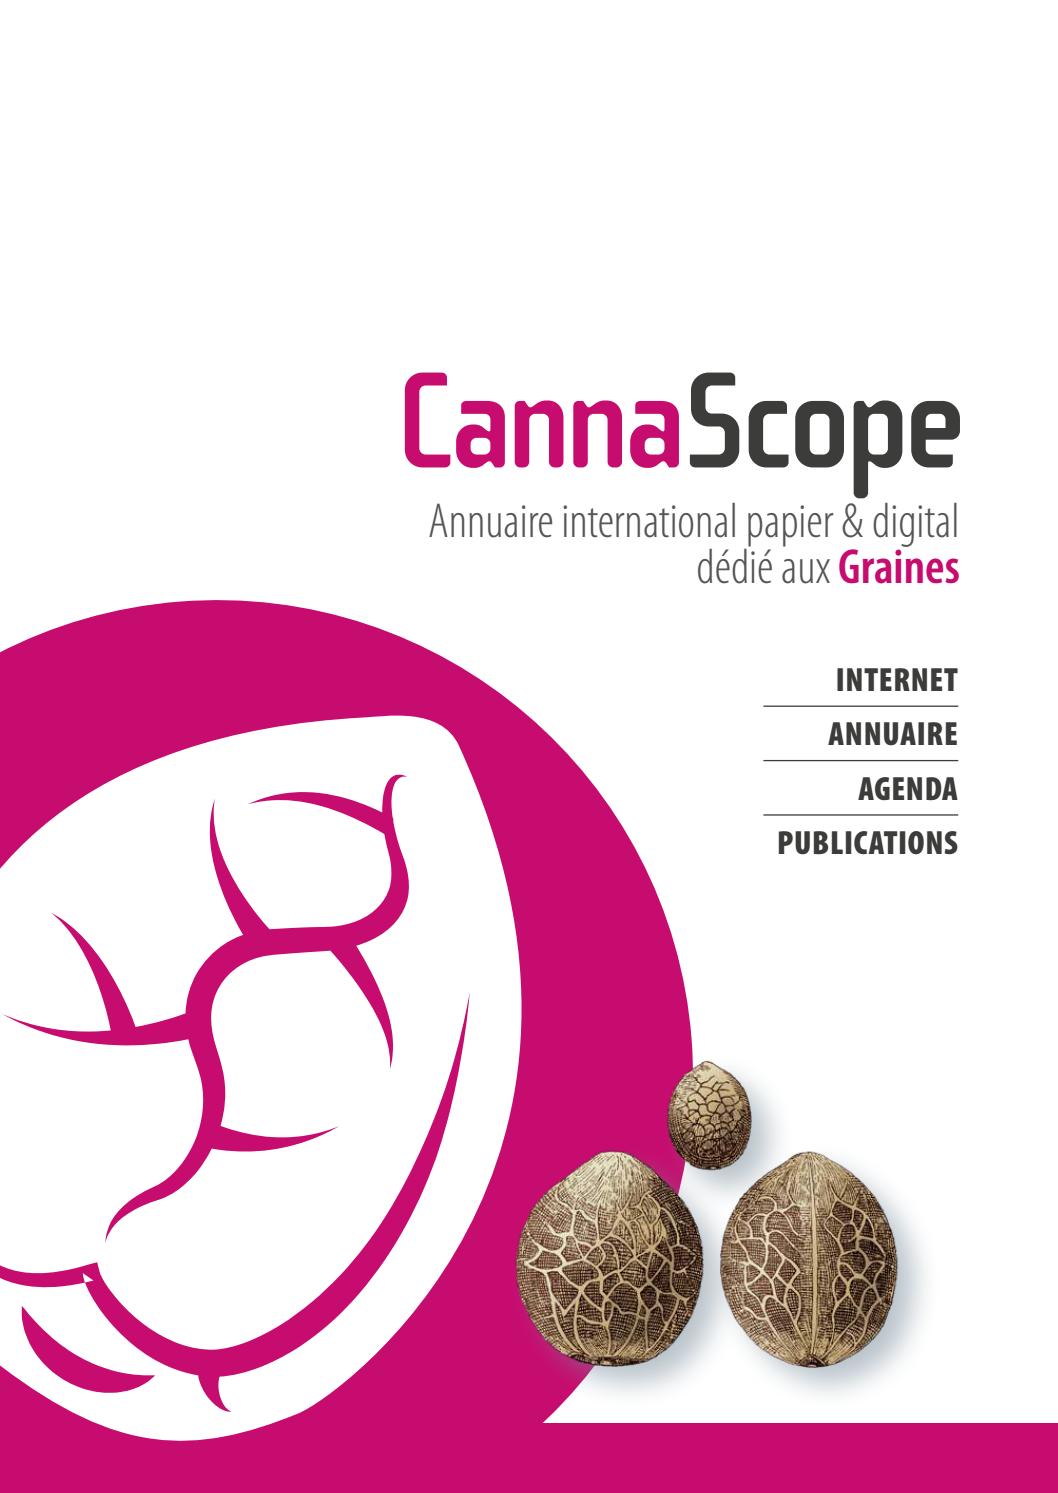 Salon De Jardin Arrondi Nouveau Cannascope 2019 – French Edition by Mama Editions issuu